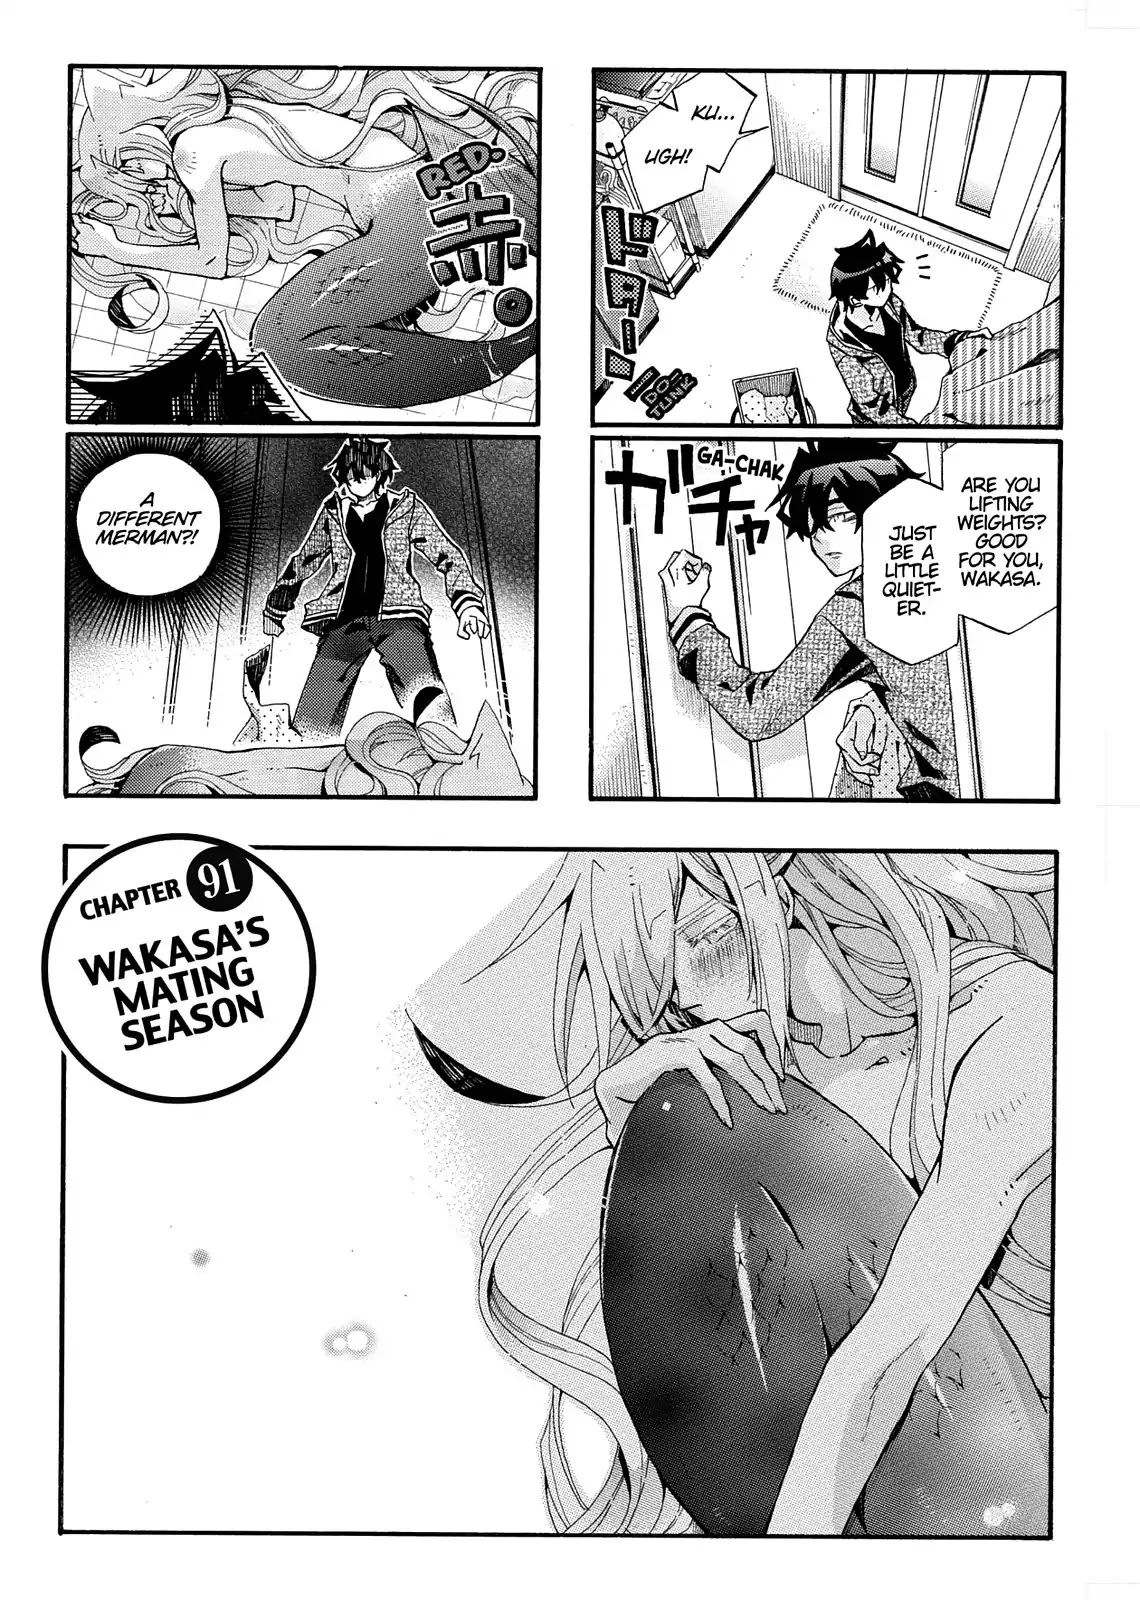 Orenchi No Furo Jijou Vol.7 Chapter 91: Wakasa's Mating Season - Picture 1